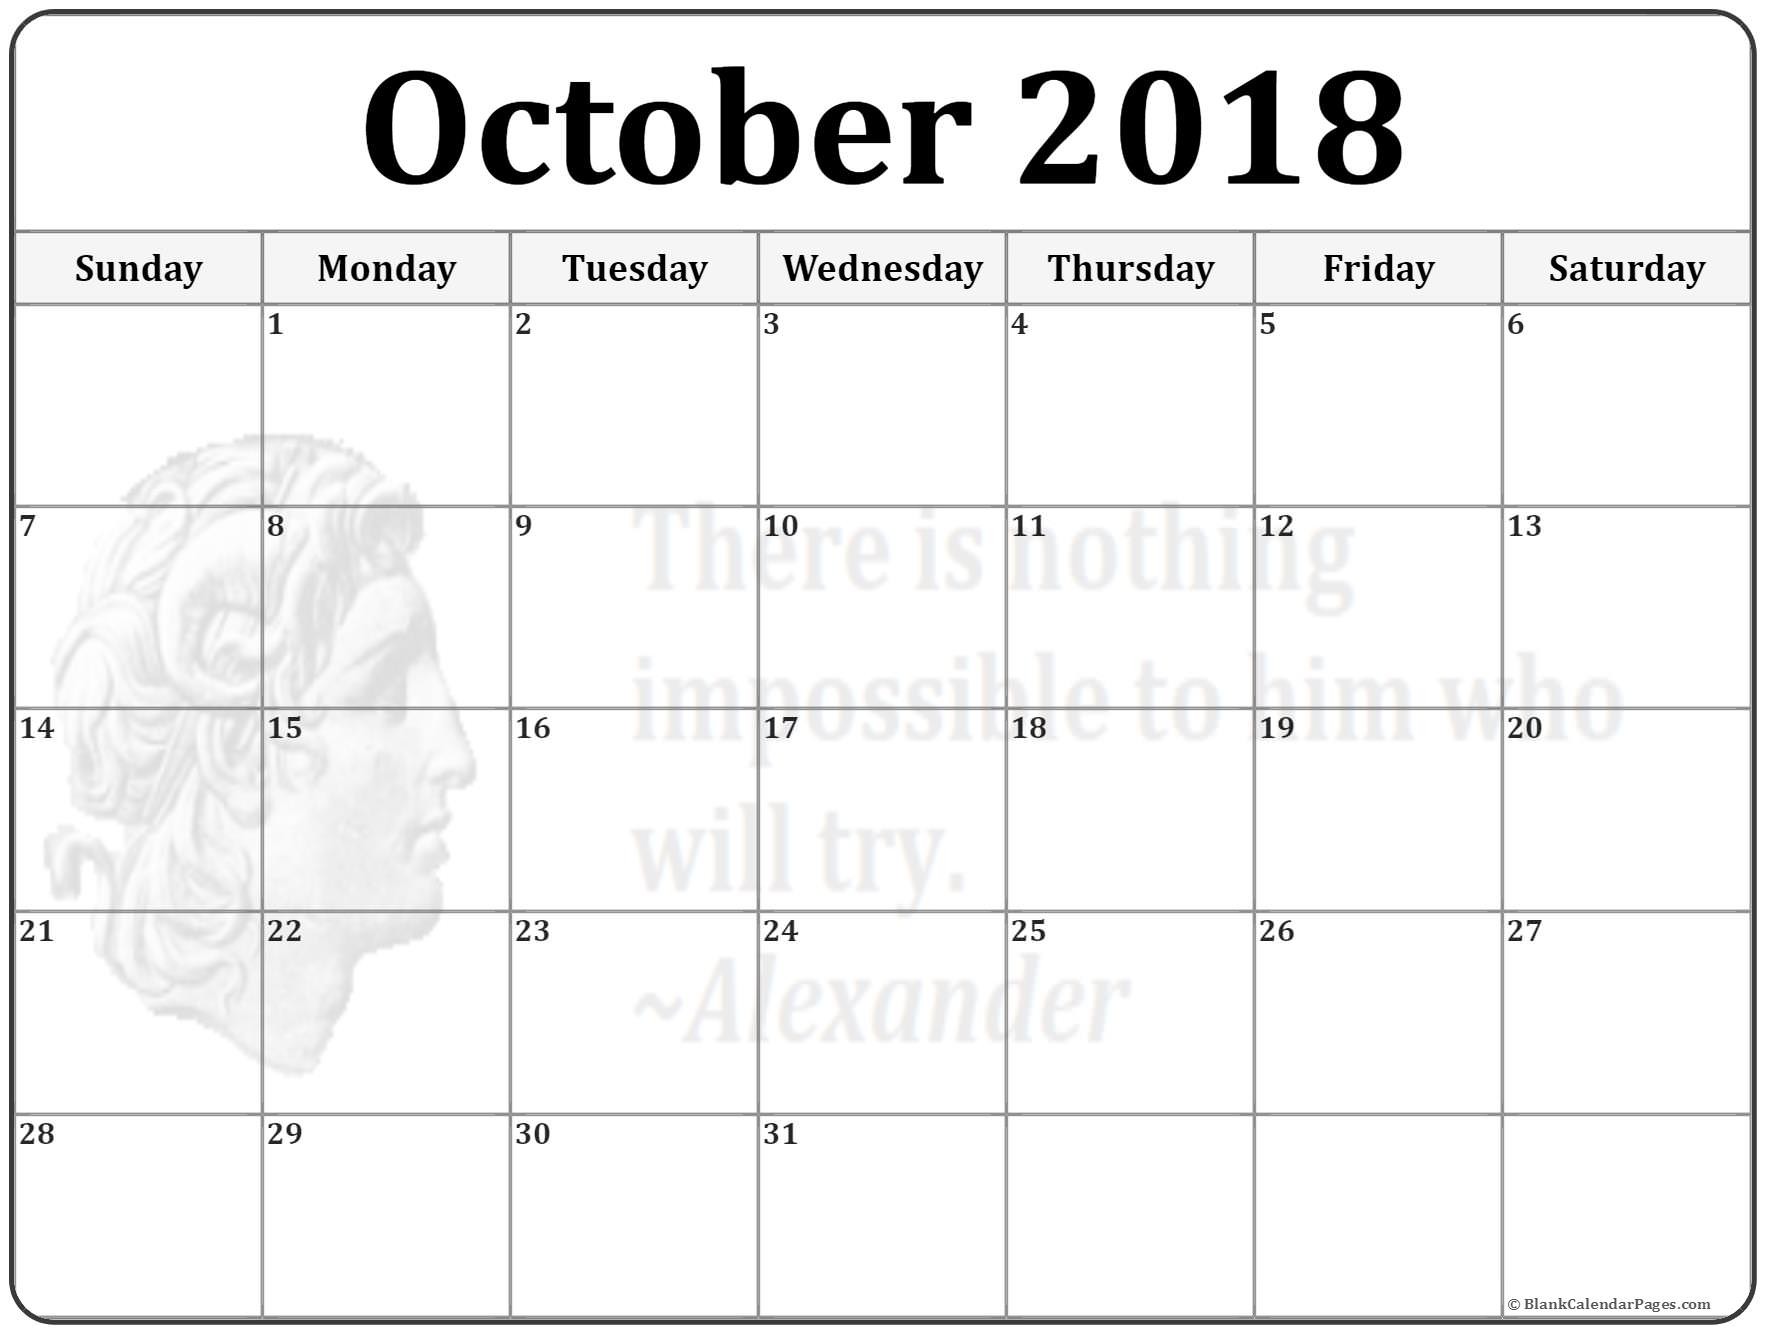 CAL=October 2018 calendar